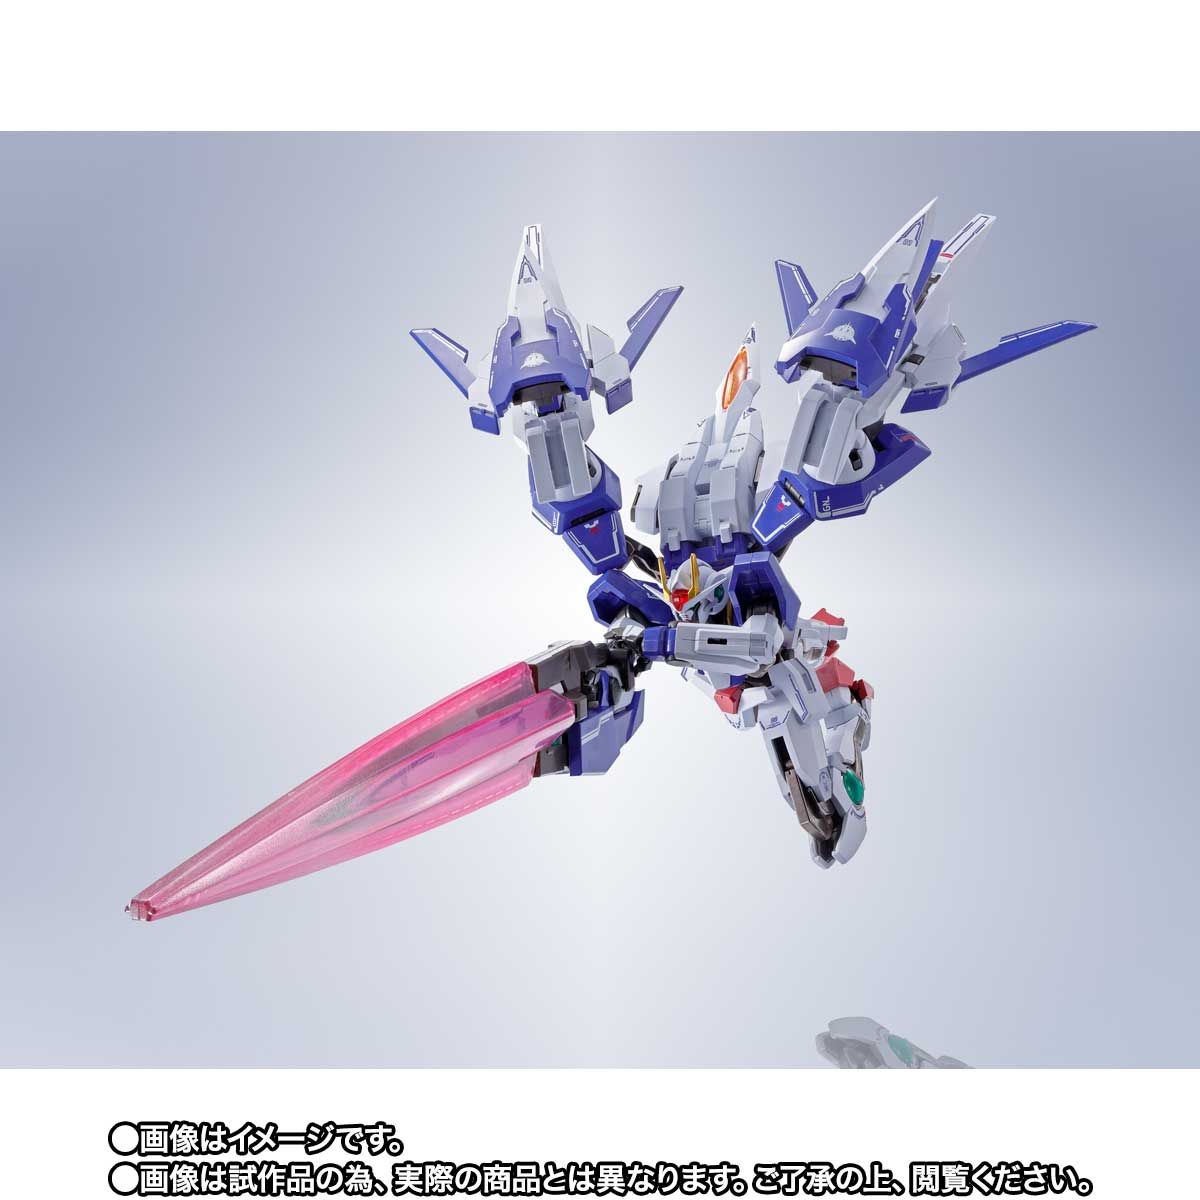 Metal Robot Damashii - 00 XN Raiser + Seven Sword + GN Sword II Blaster Set